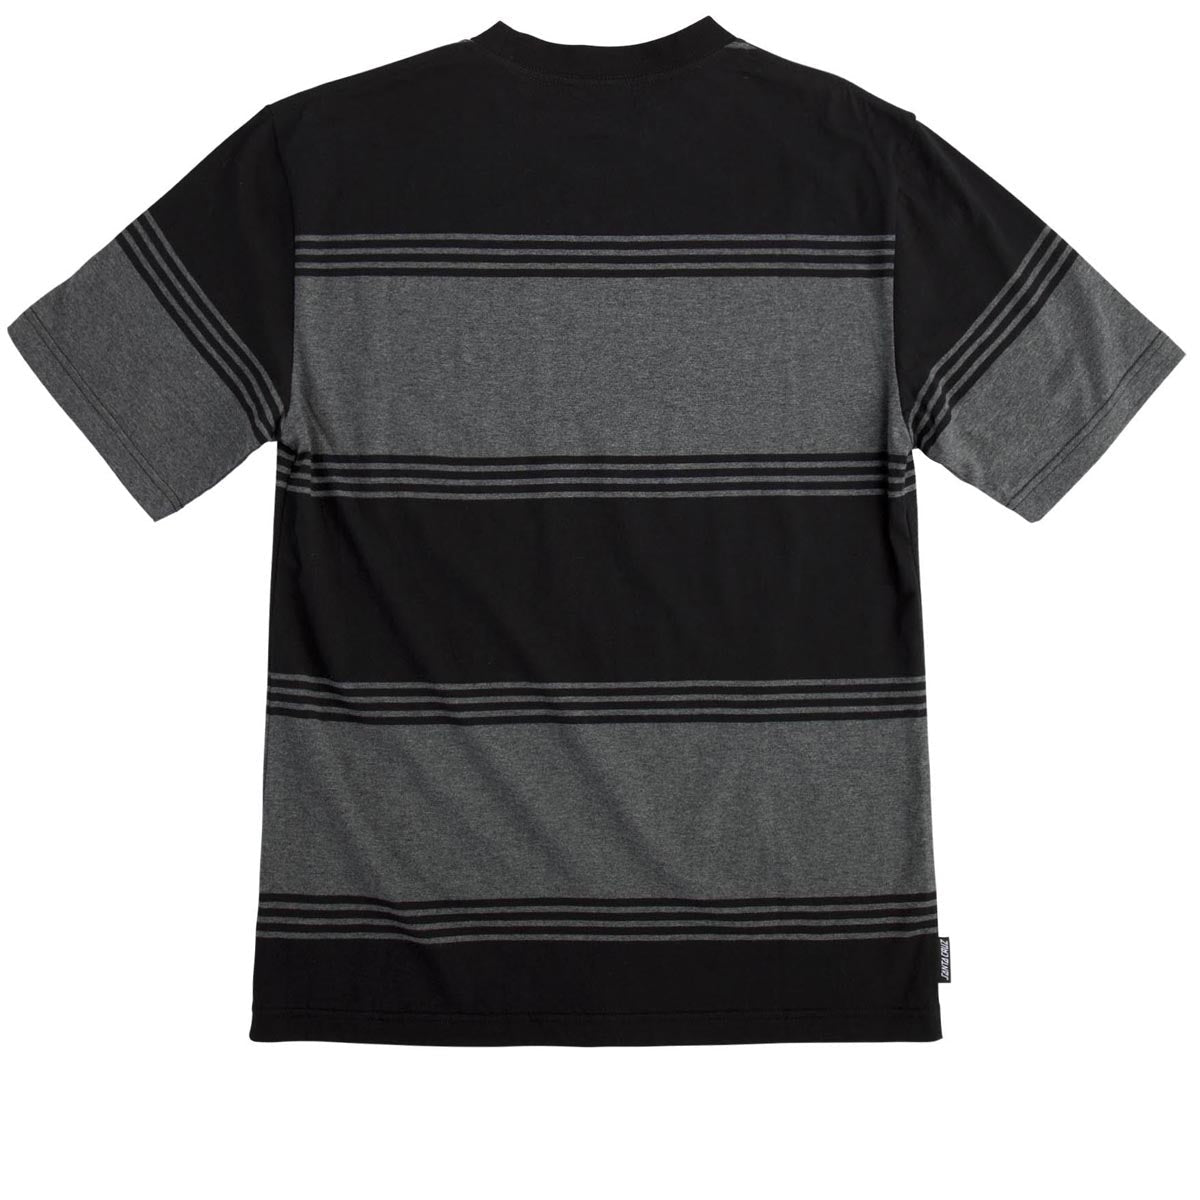 Santa Cruz Ridge T-Shirt - Black/Charcoal image 2